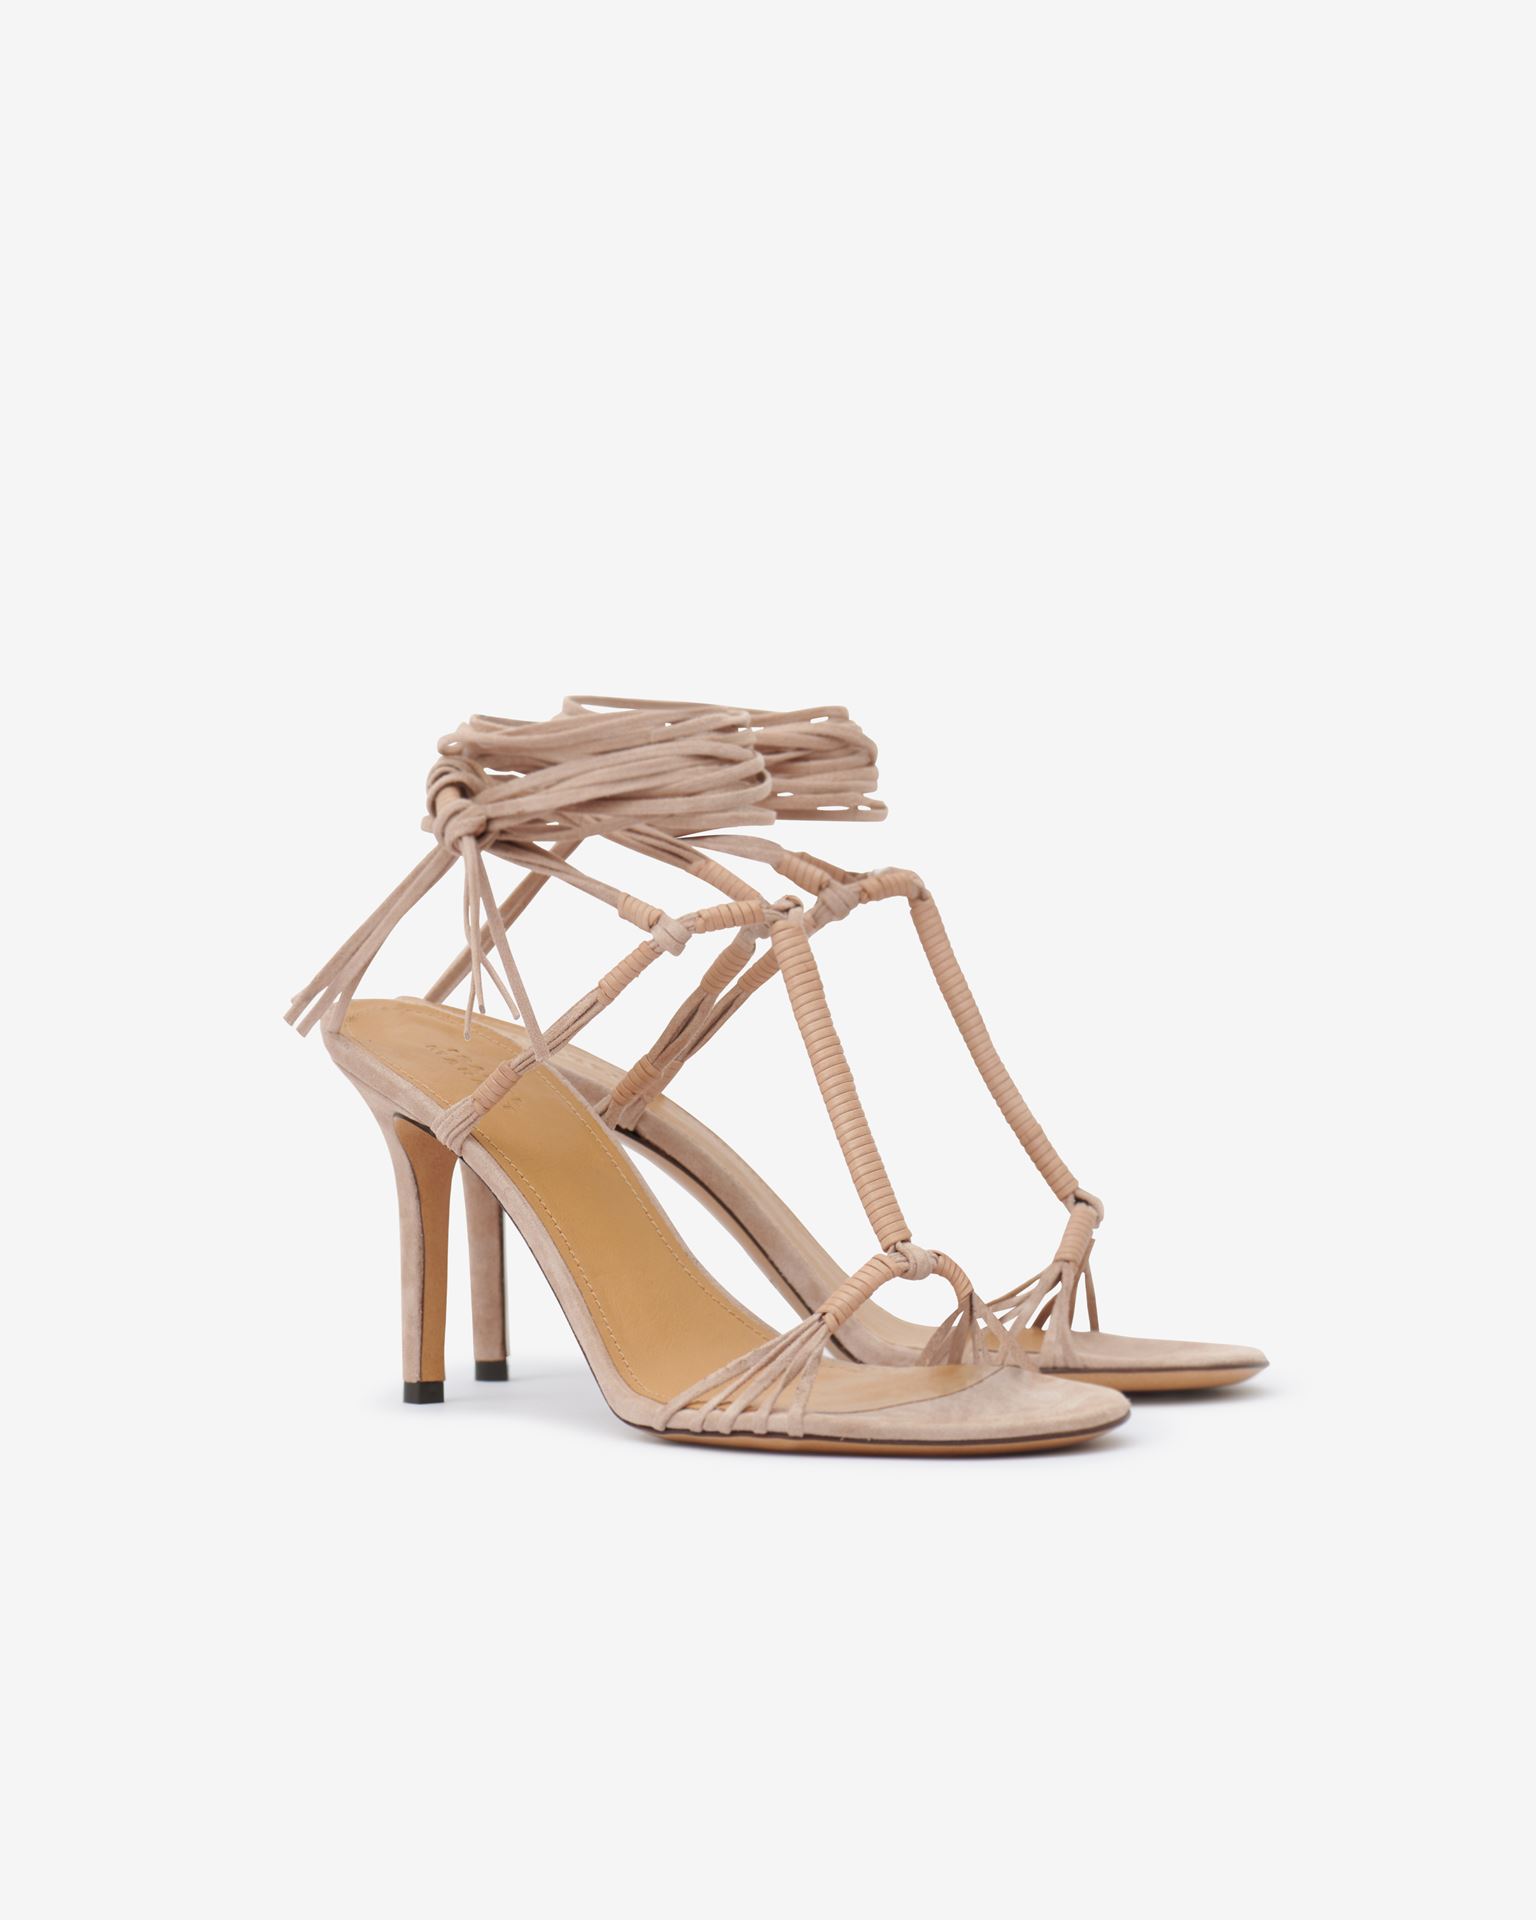 Isabel Marant, Arja Suede Leather Sandals - Women - Brown